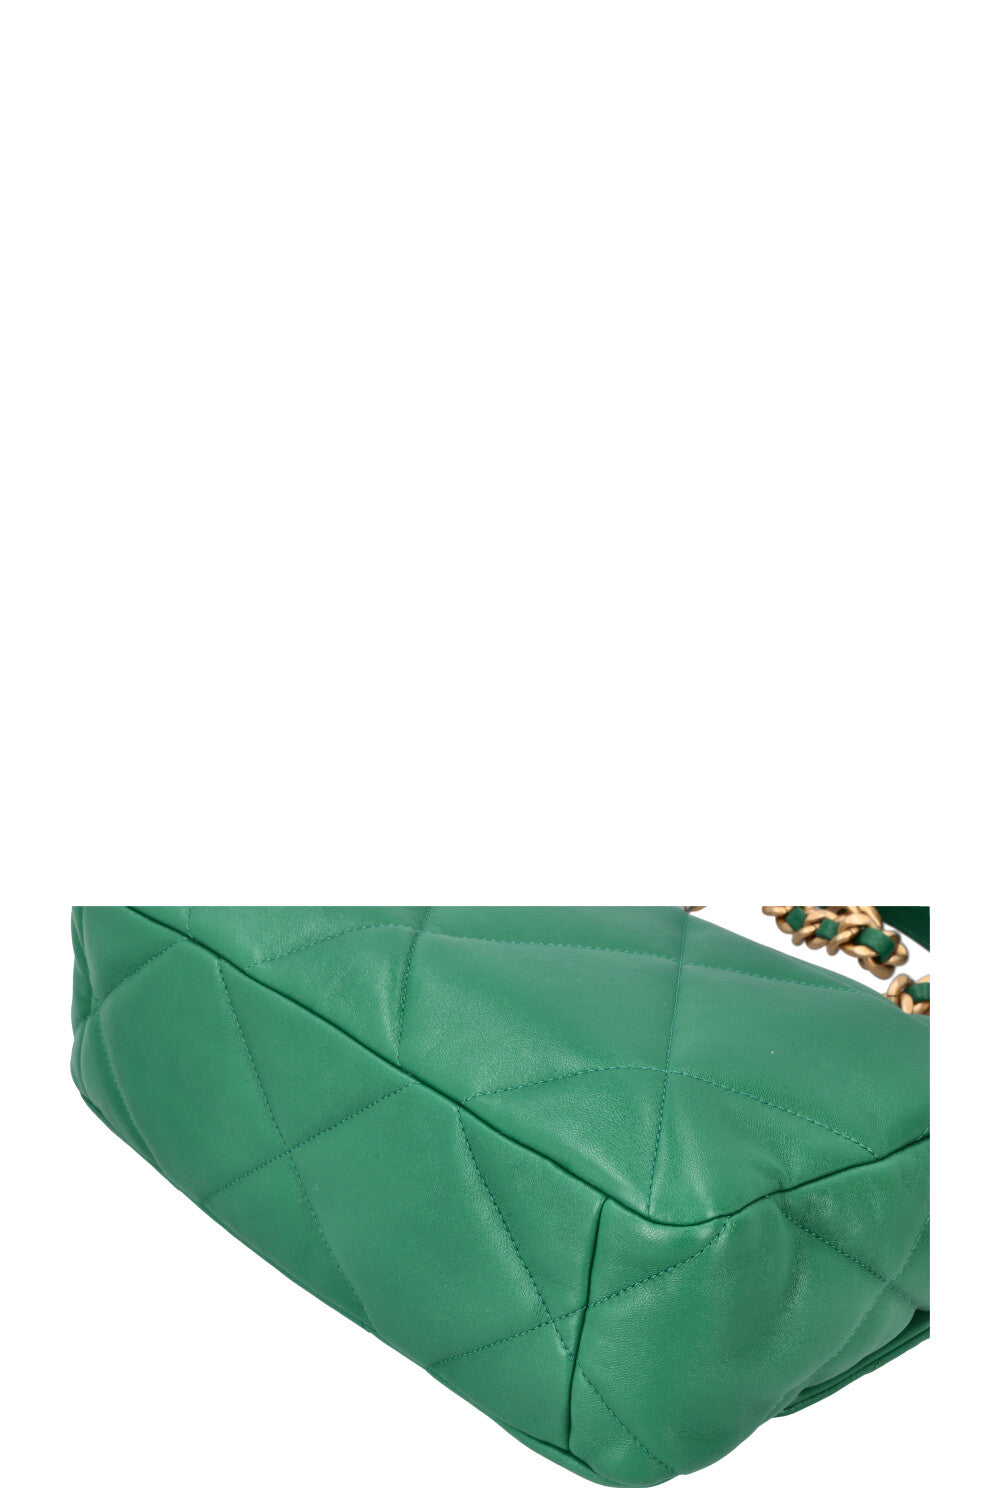 CHANEL 19 Large Bag Green